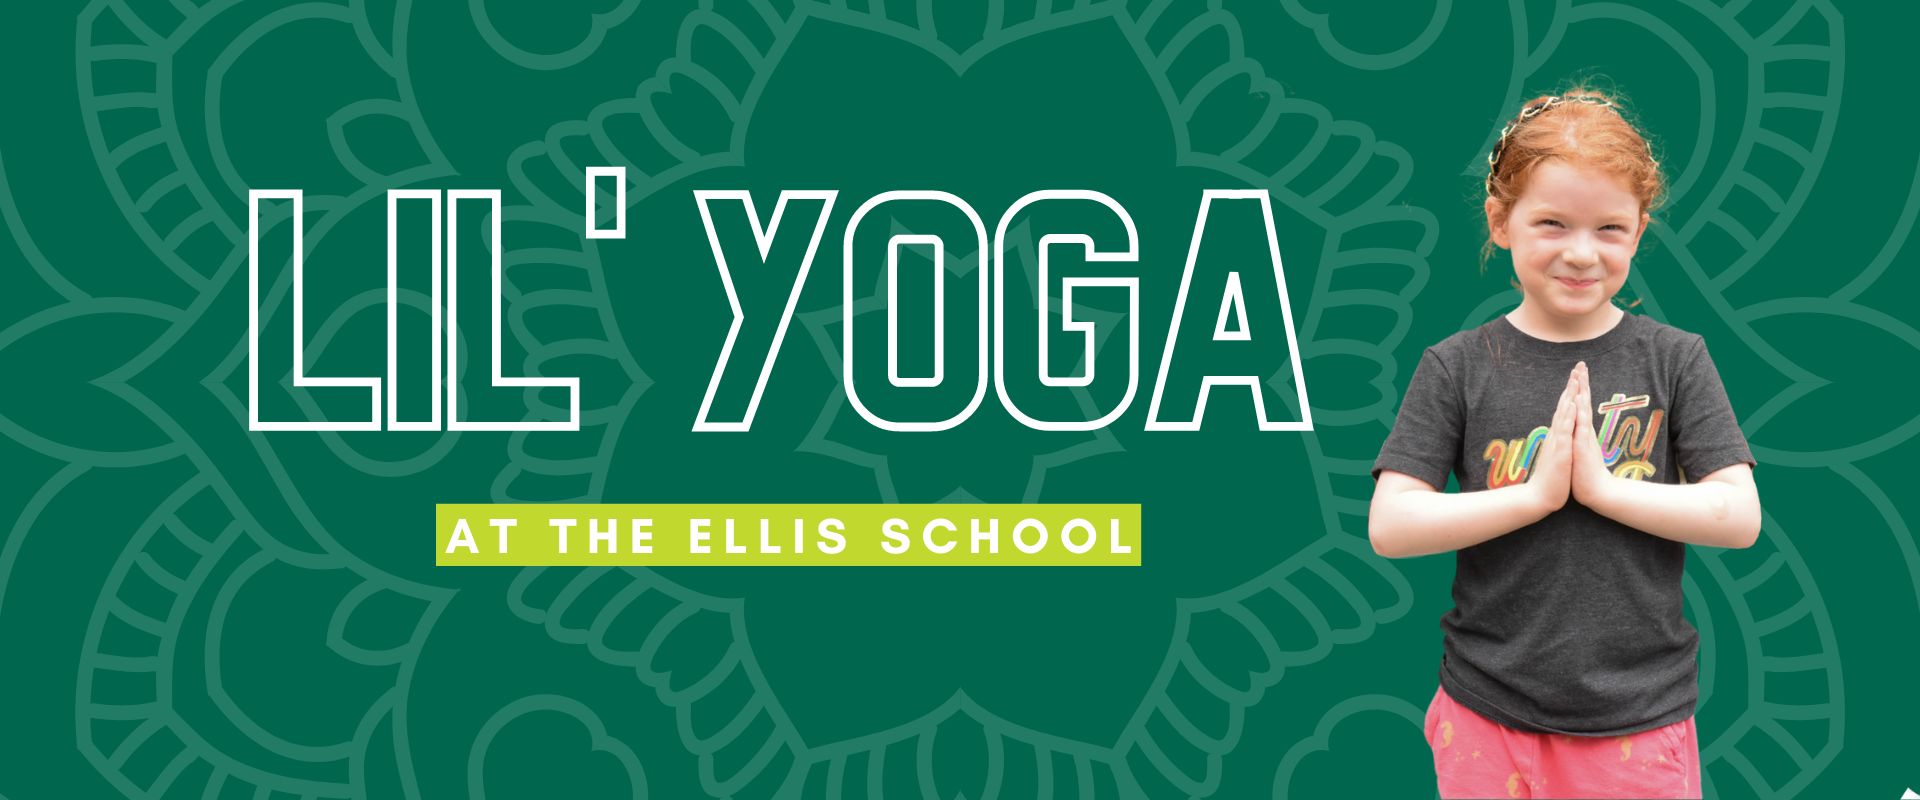 Lil' Yoga at The Ellis School